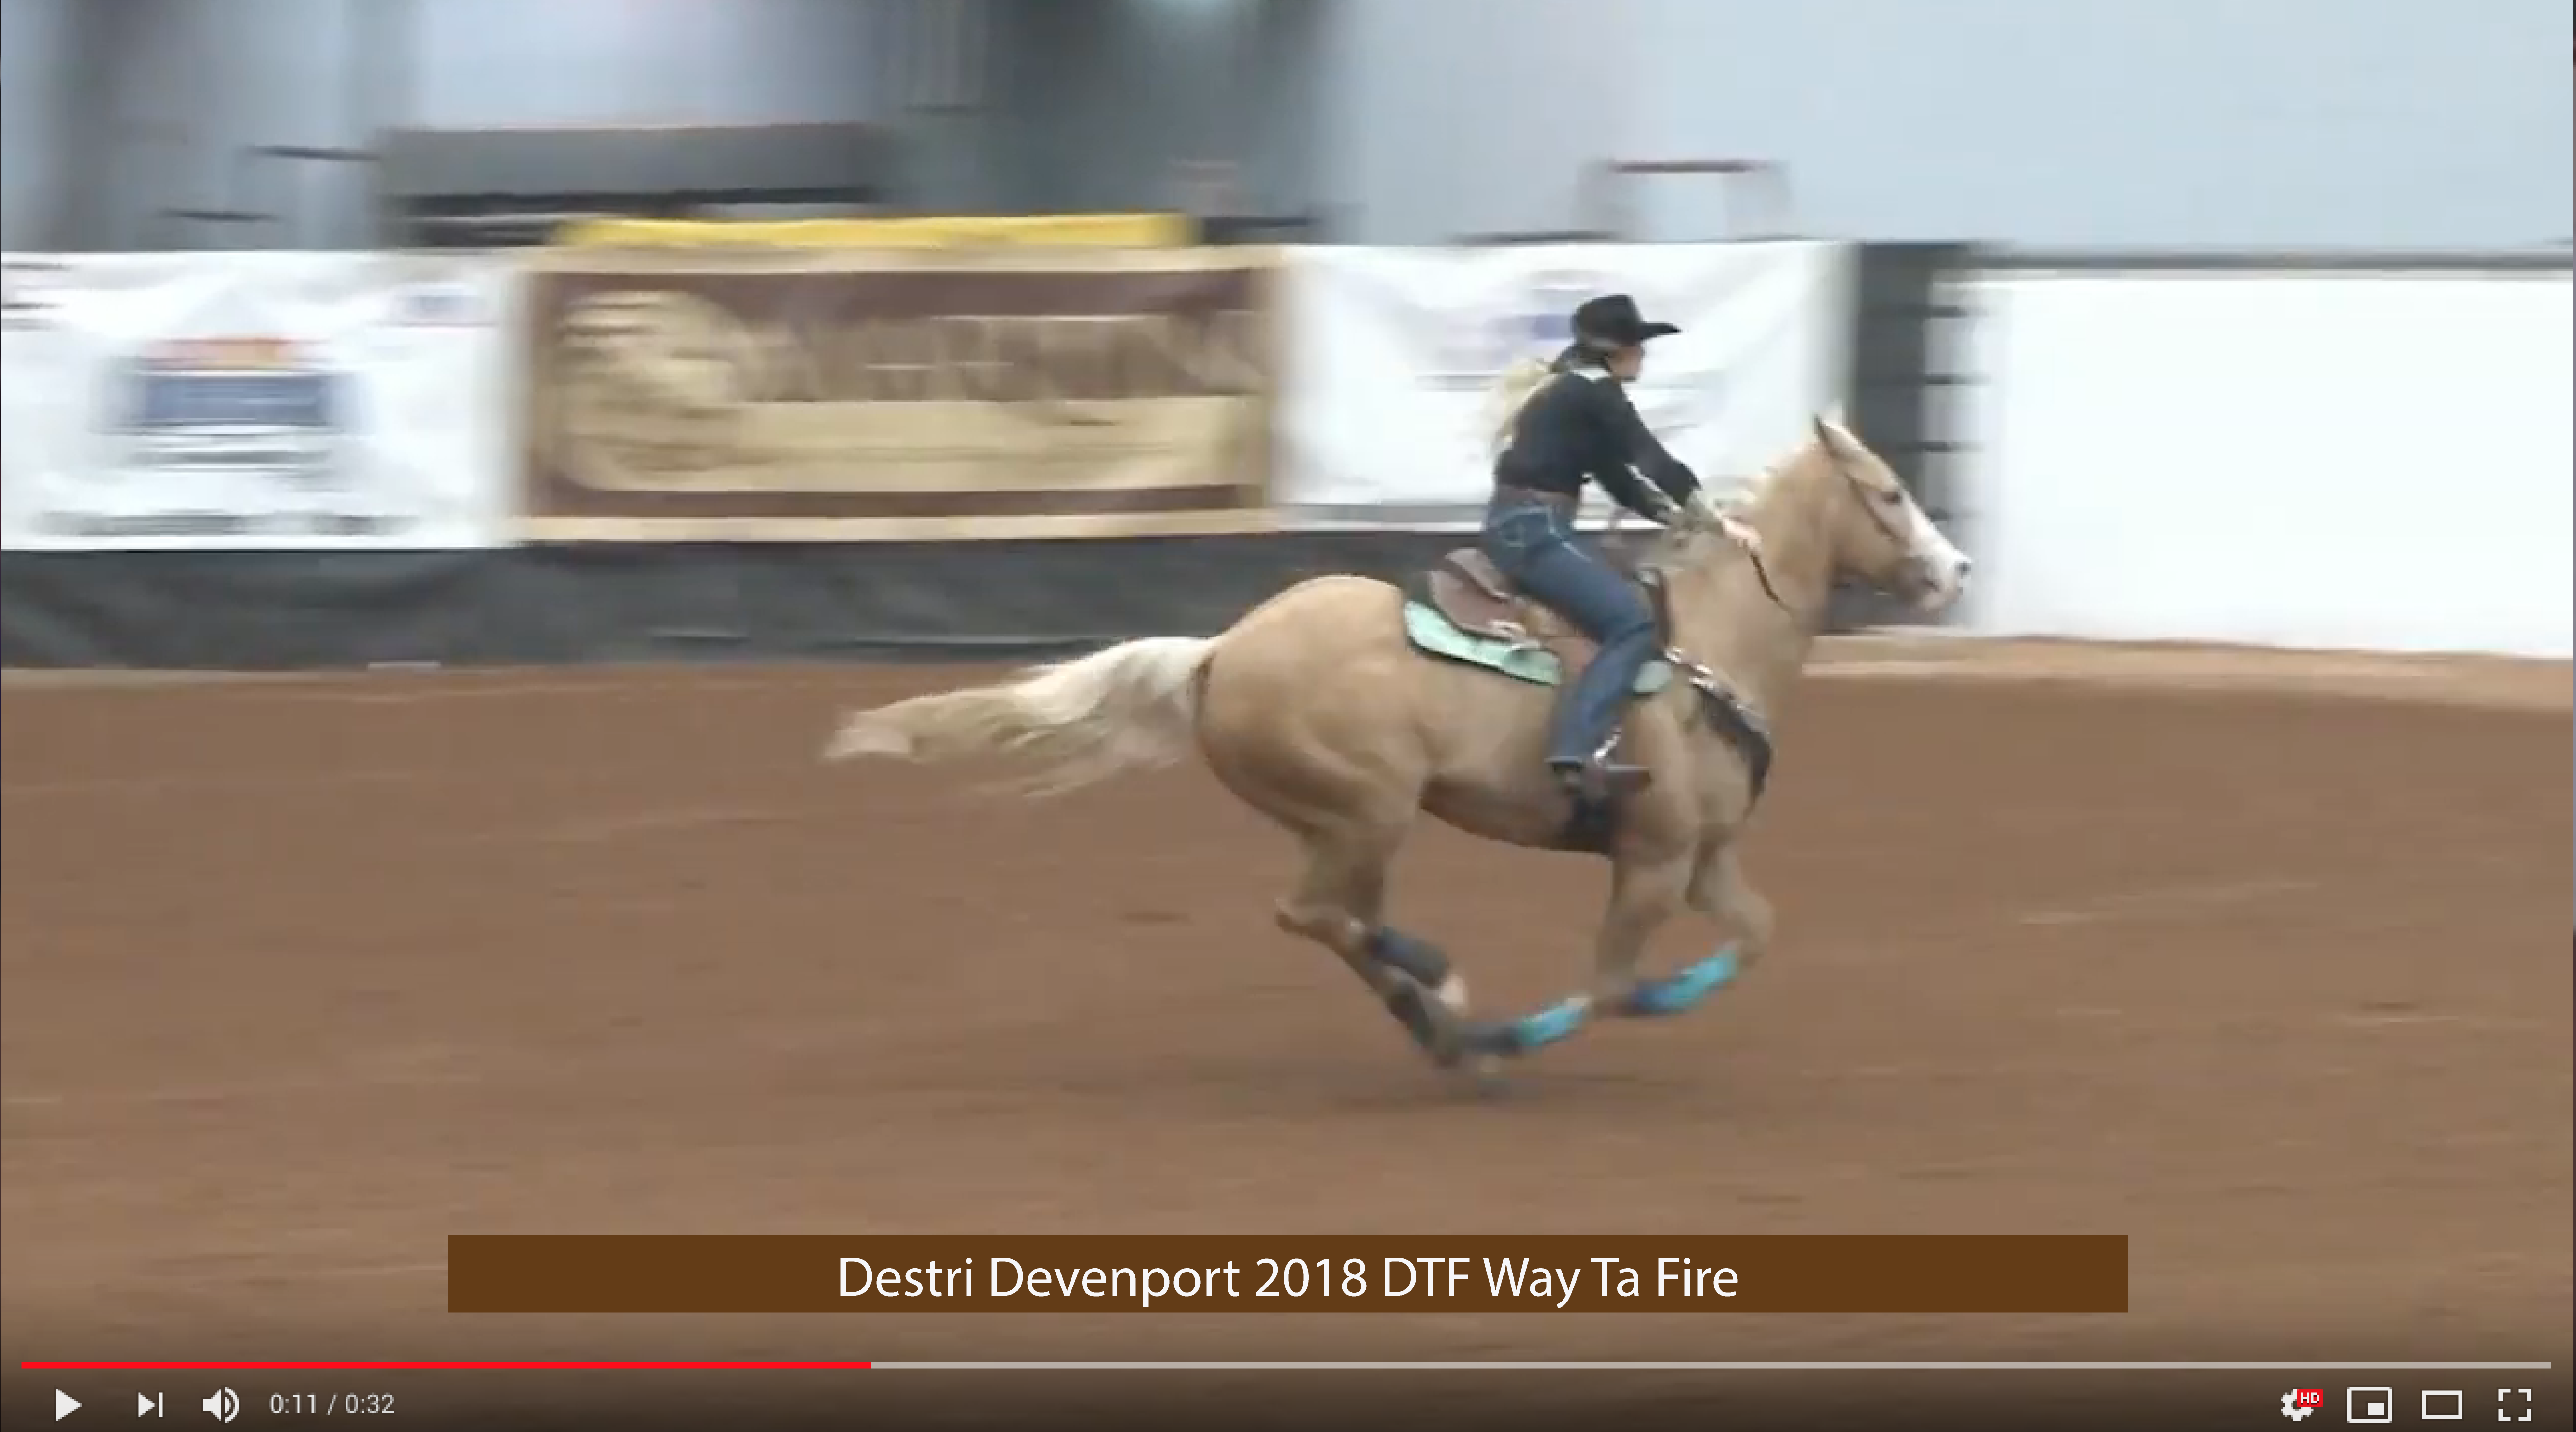 Destri Devenport DTRF Way Ta Fire 2018